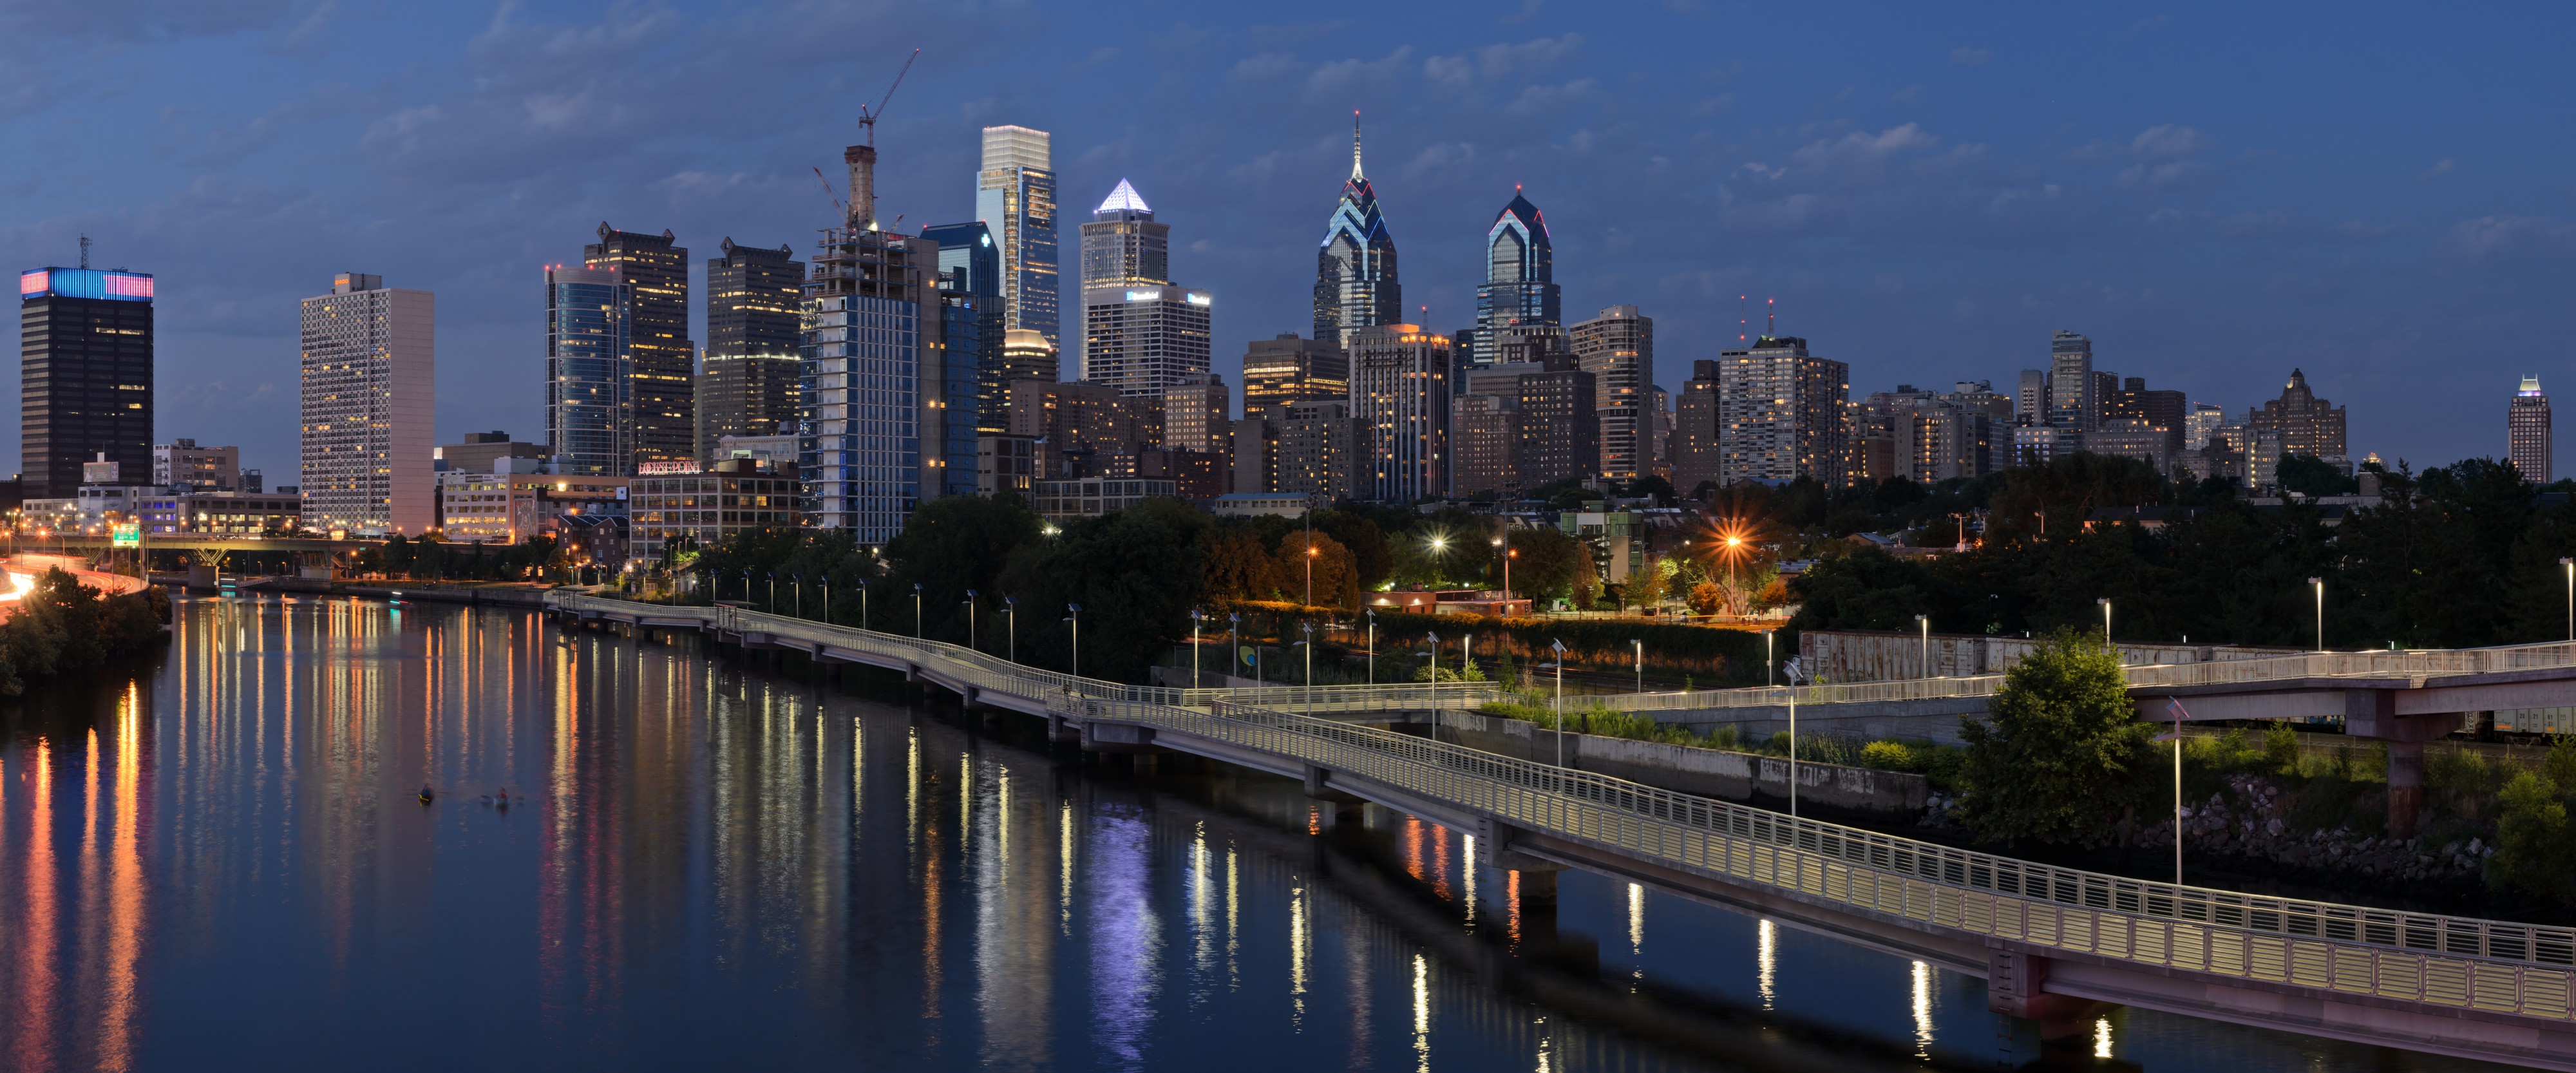 Philadelphia from South Street Bridge July 2016 panorama 3